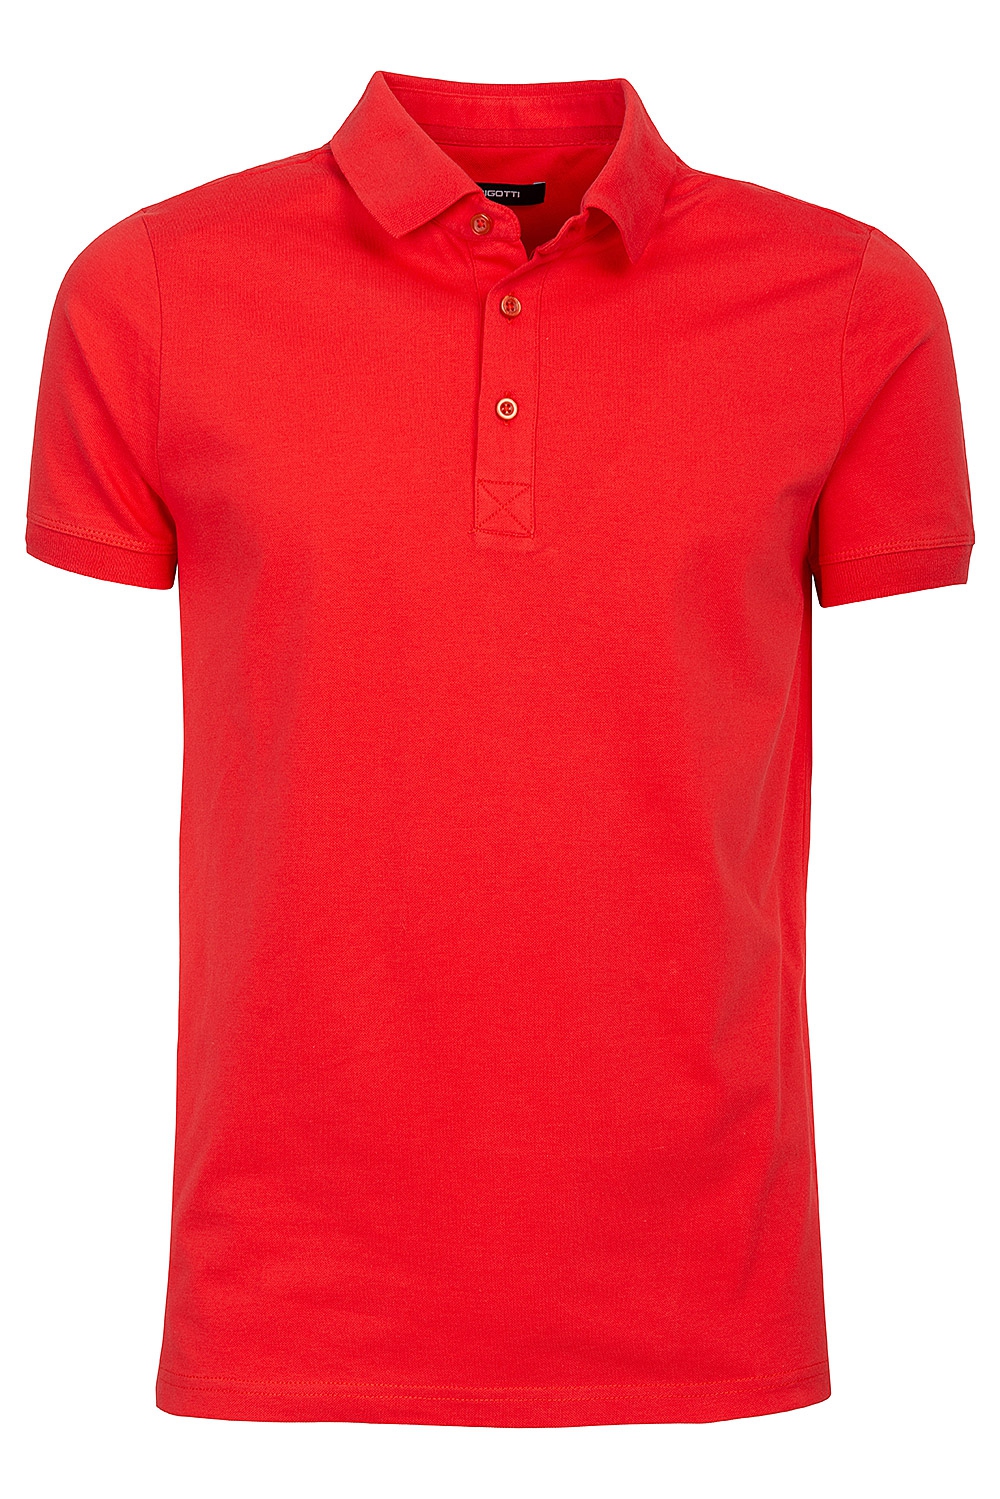 Red plain t-shirt 0